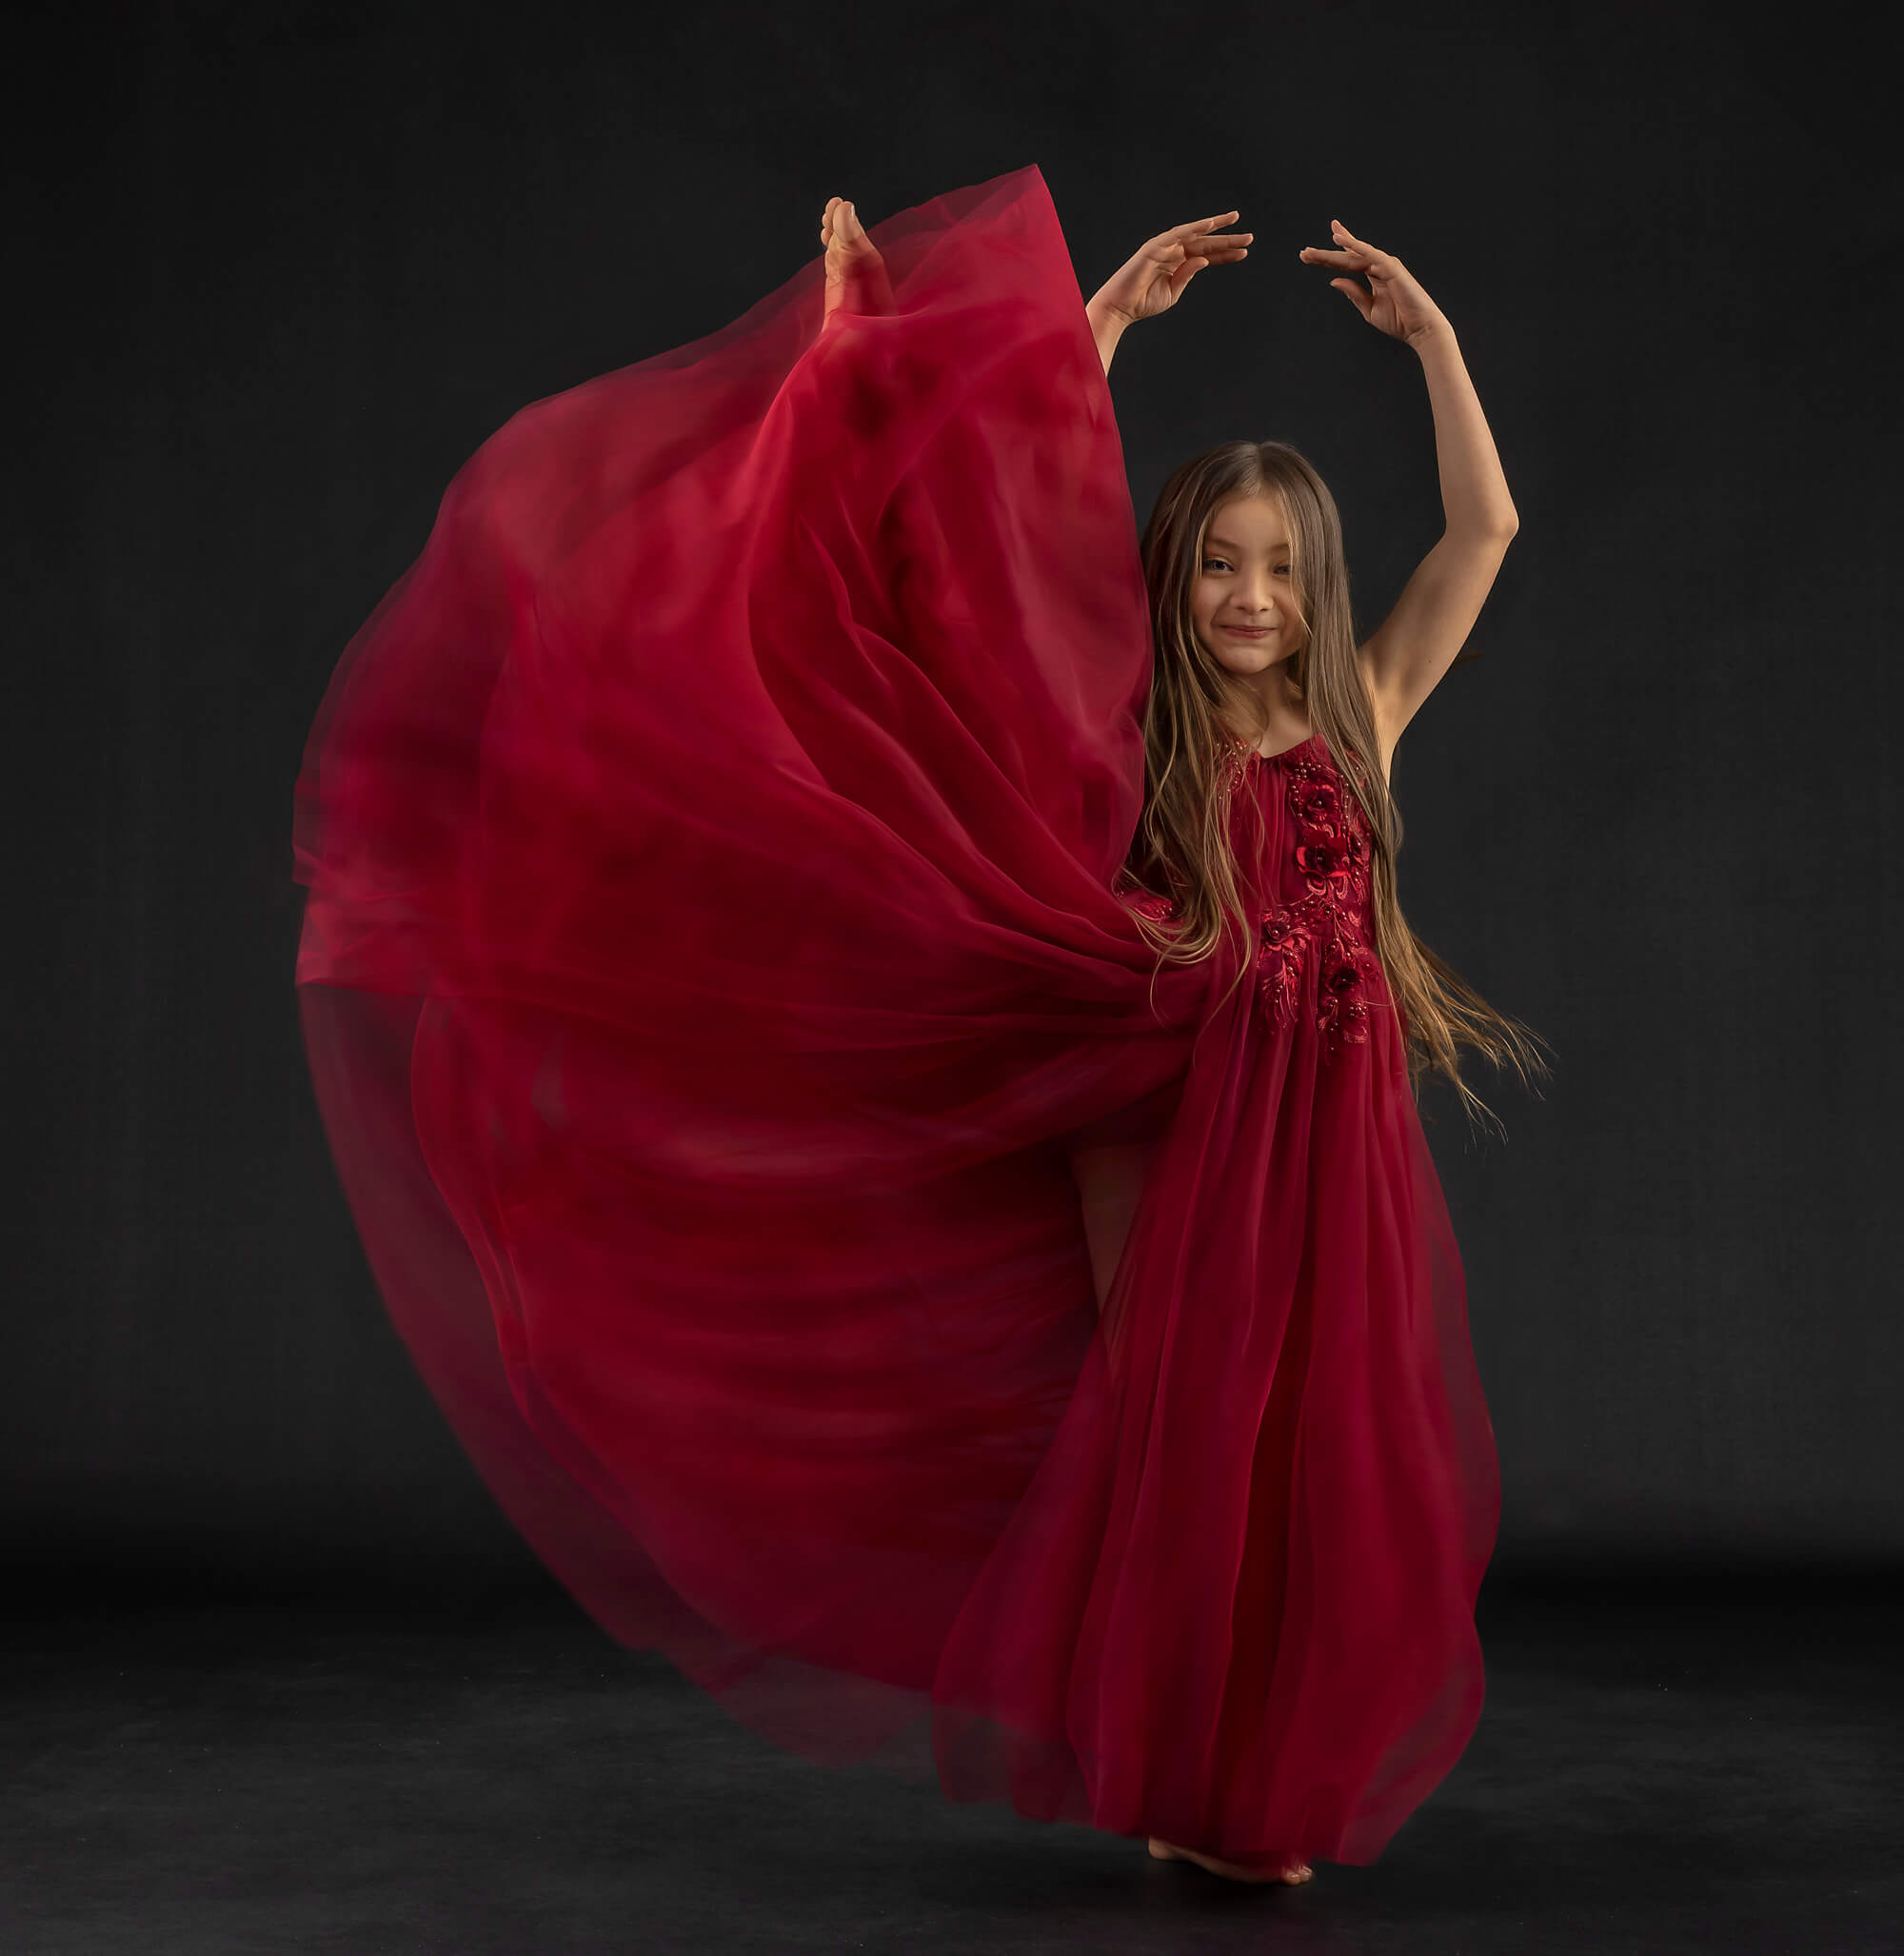 Fine art dancer girl in a red dress